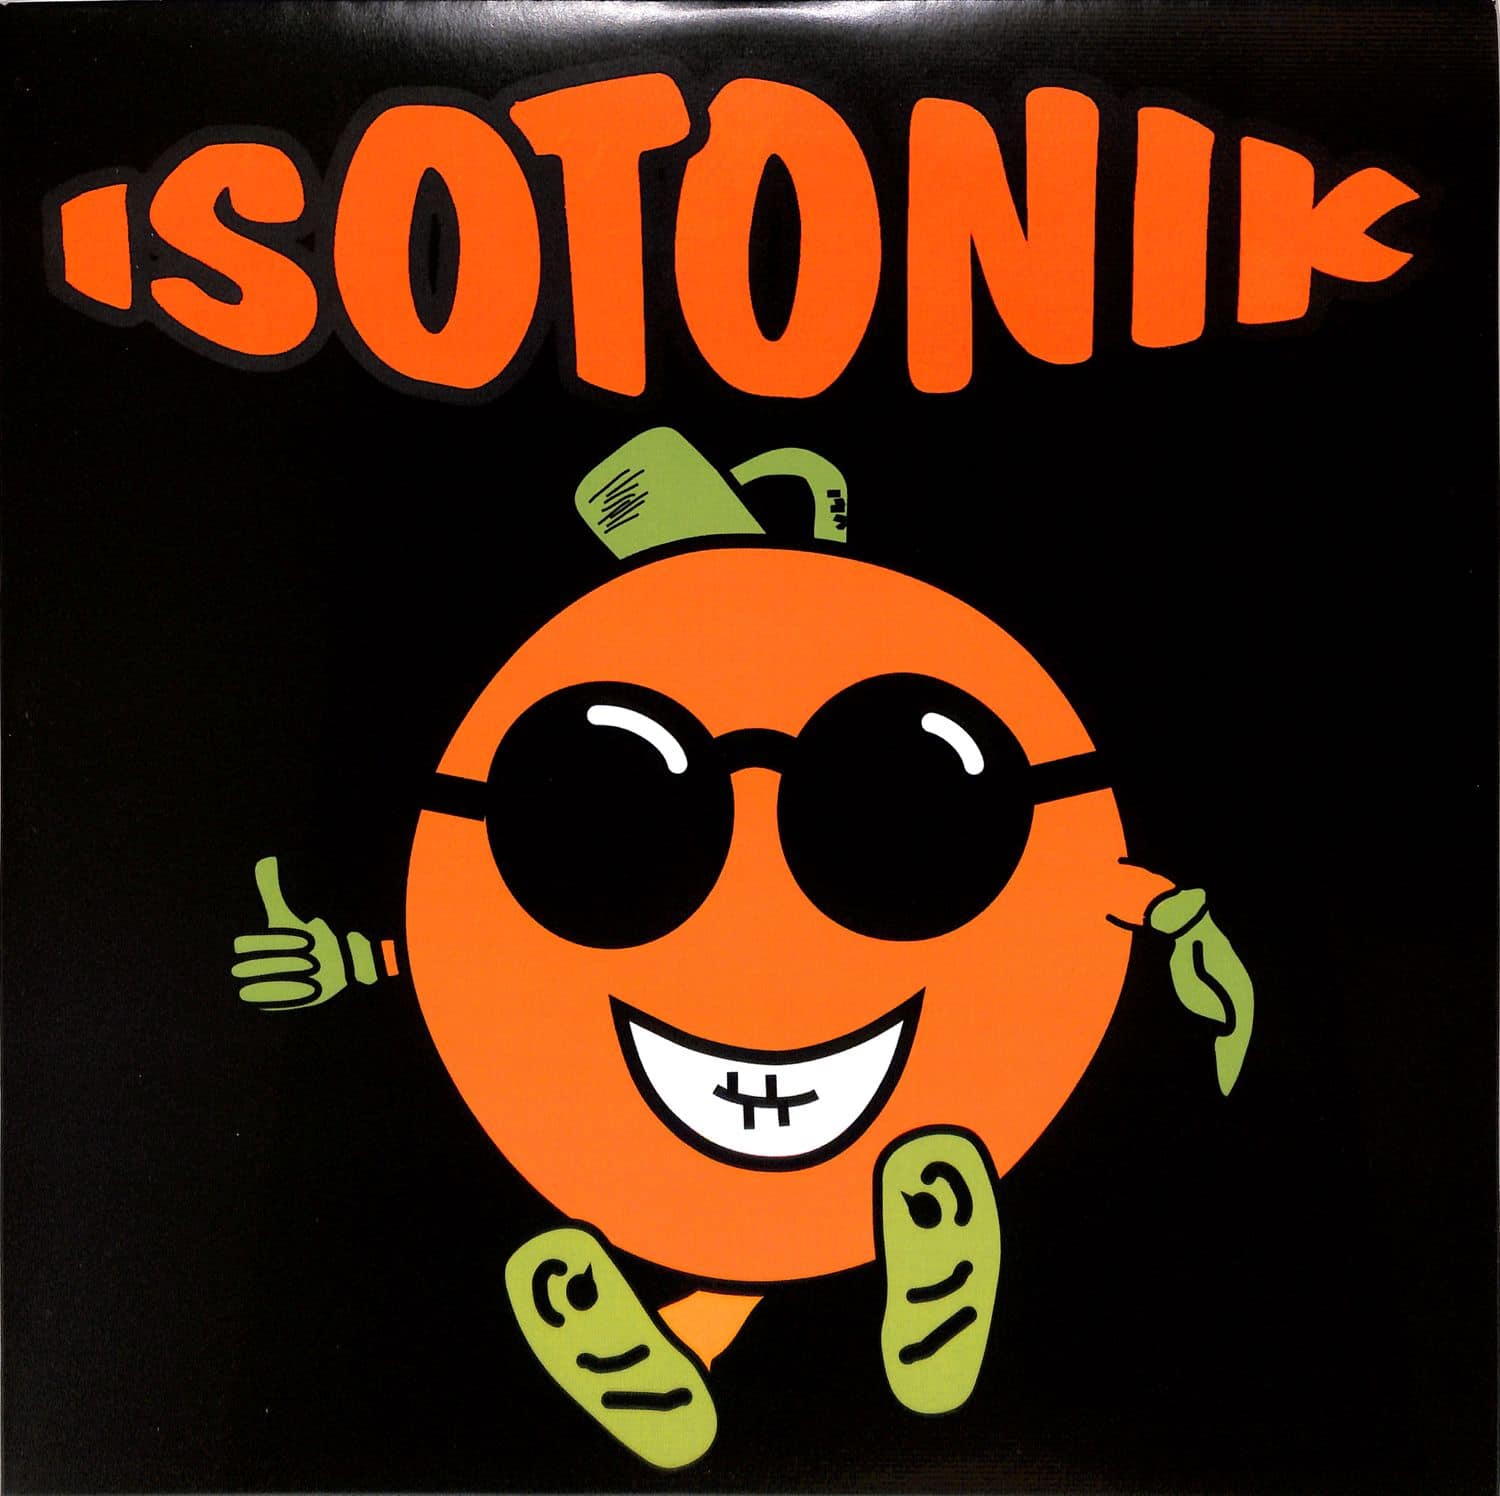 Isotonik - A NEW LIFE EP